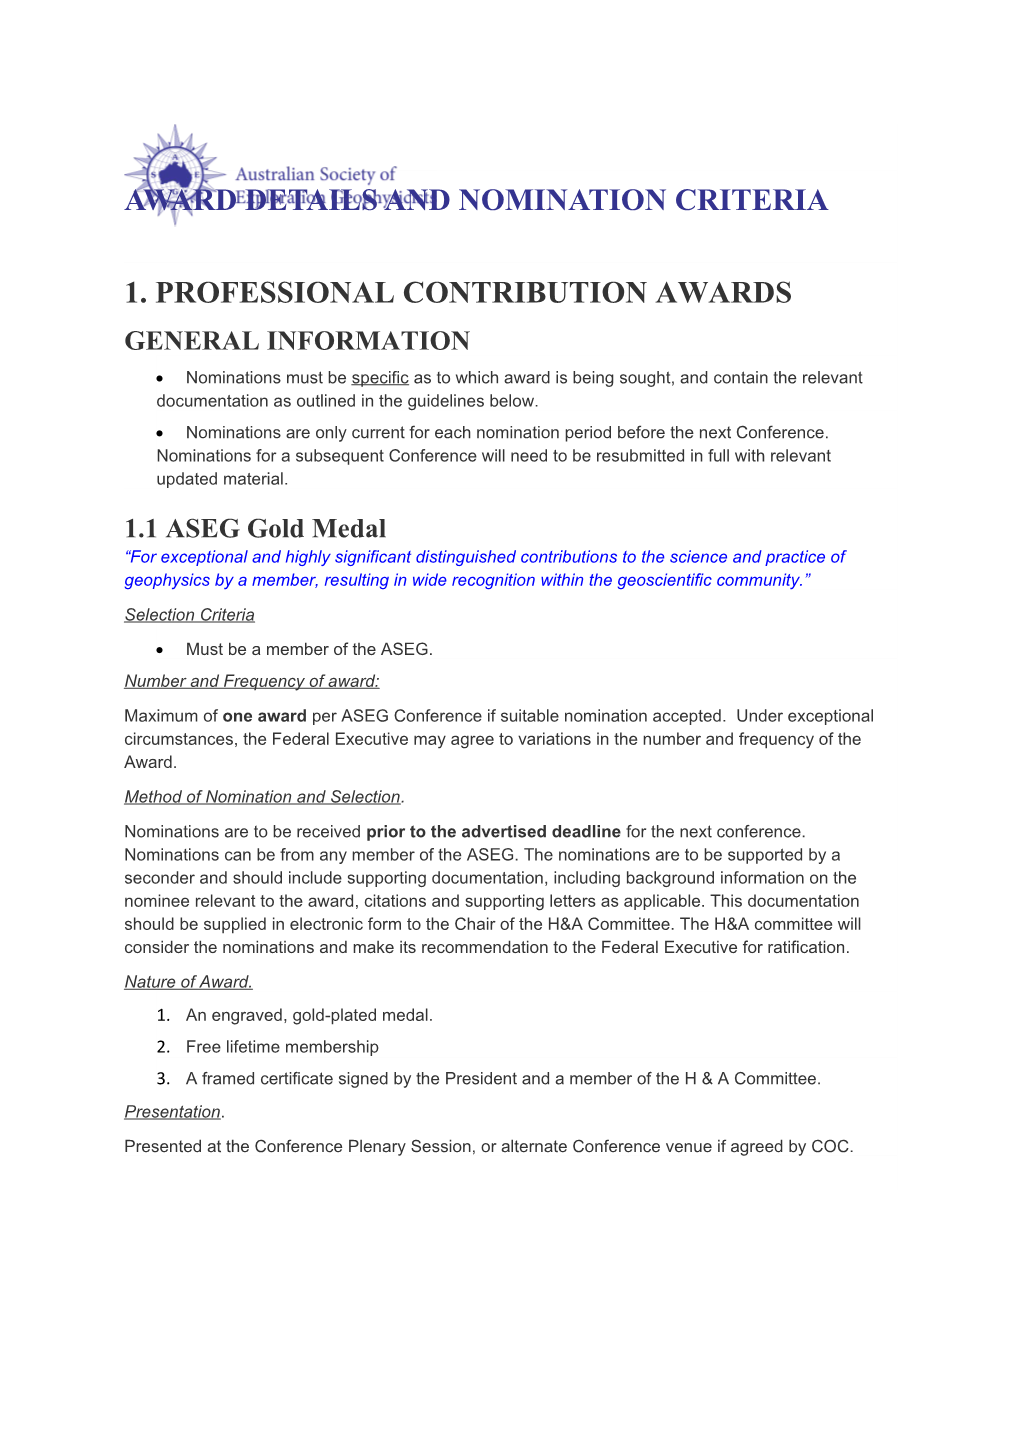 Award Details and Nomination Criteria